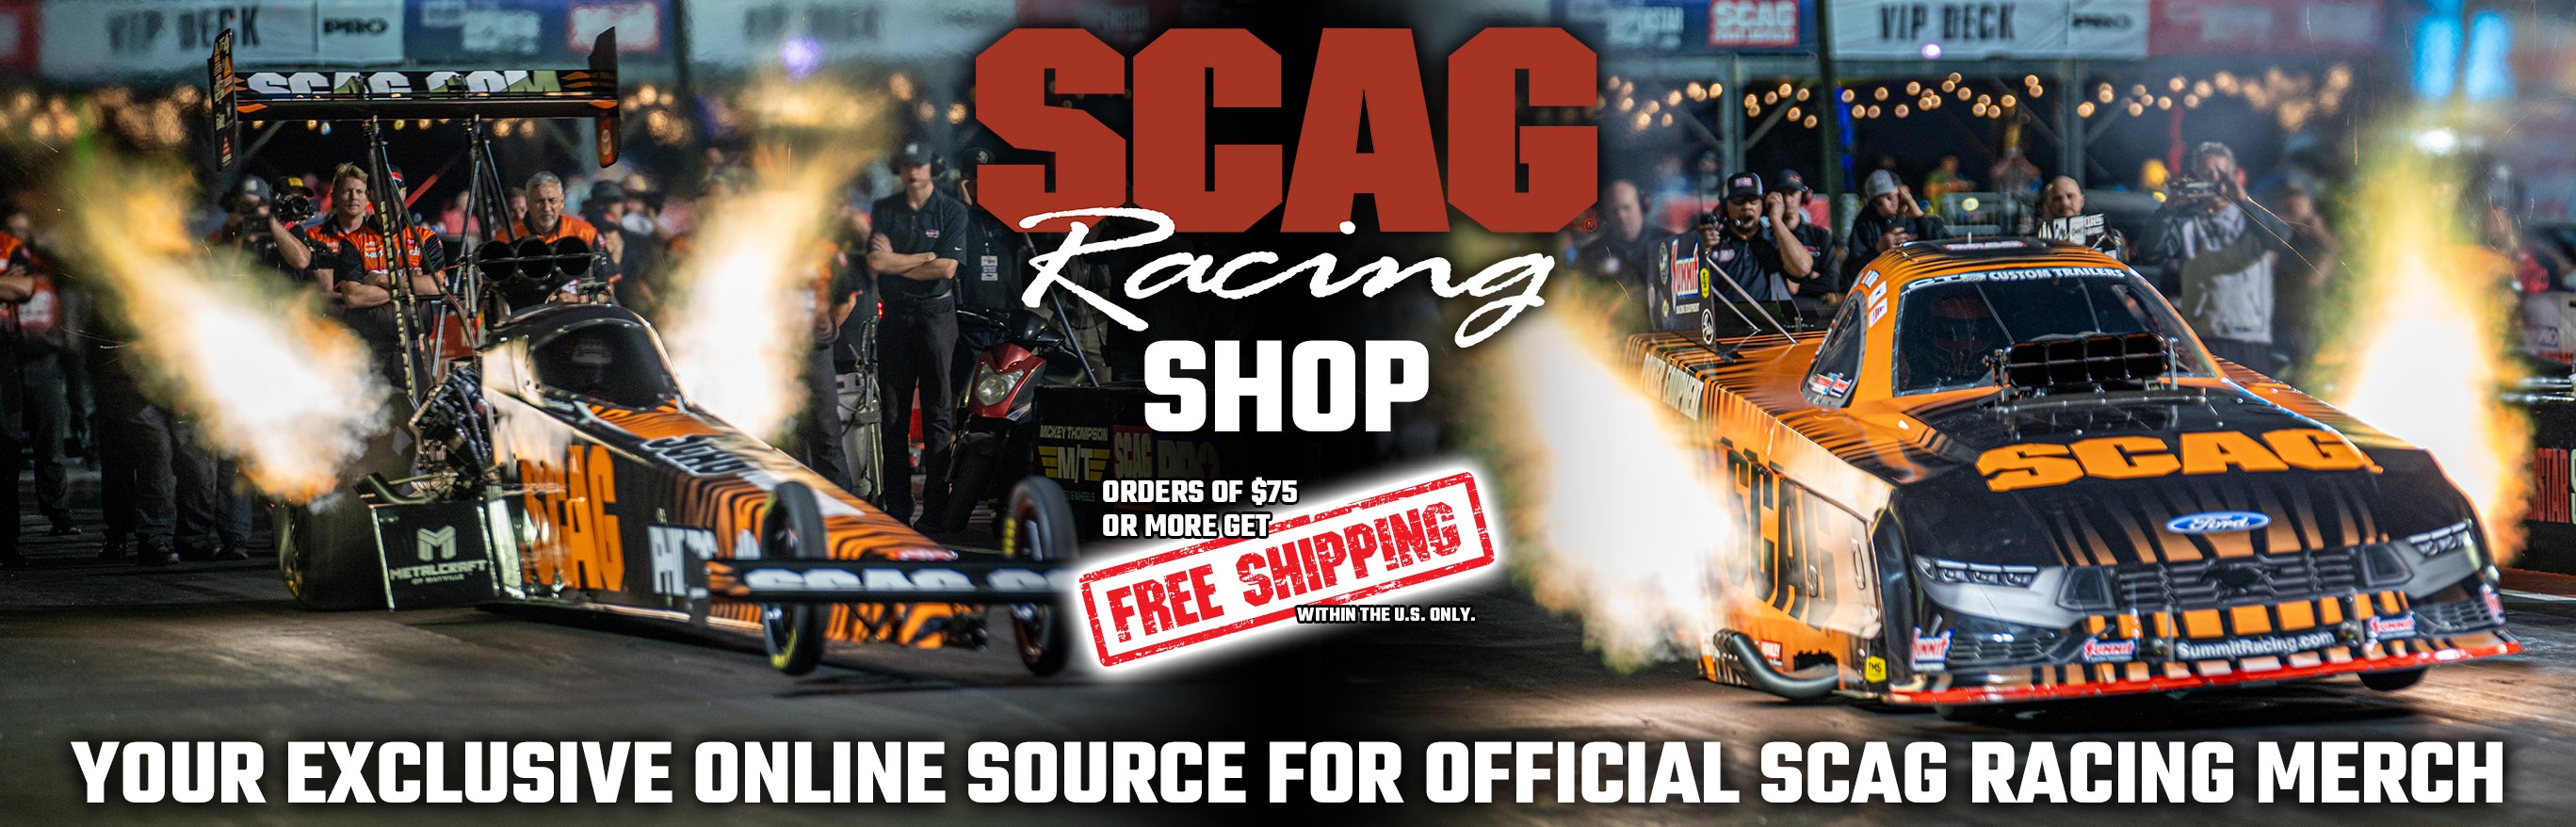 Scag Racing Shop Header - Free Shipping